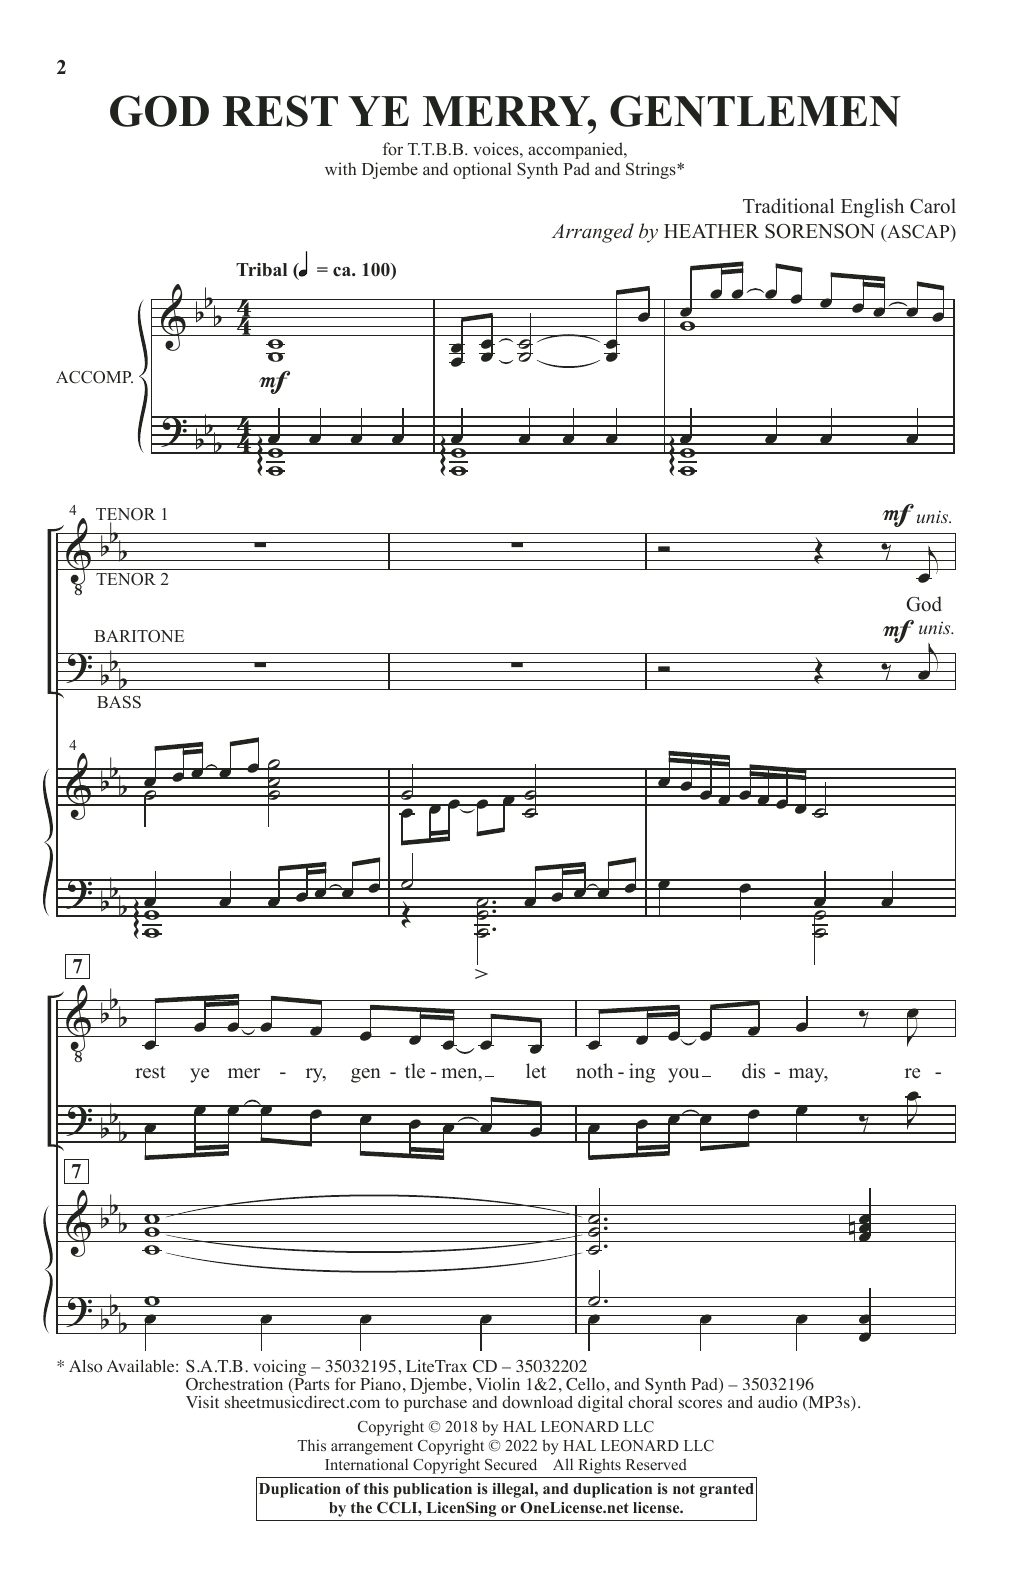 Traditional English Carol God Rest Ye Merry, Gentlemen (arr. Heather Sorenson) Sheet Music Notes & Chords for TTBB Choir - Download or Print PDF